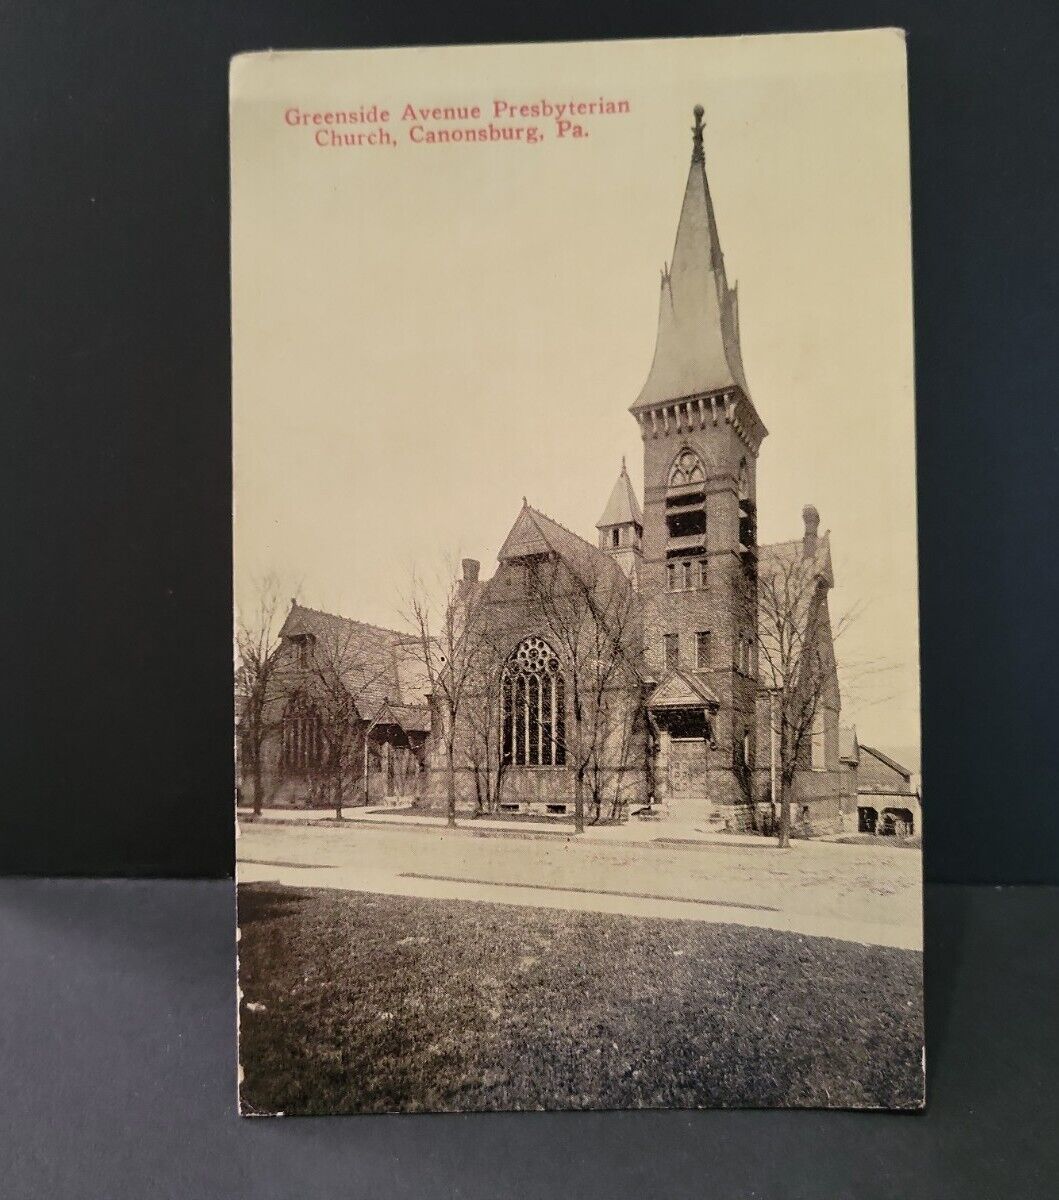 1915 Cannonsburg PA GREENSIDE AVE. PRESBYTERIAN CHURCH Real Photo Rppc Postcard 